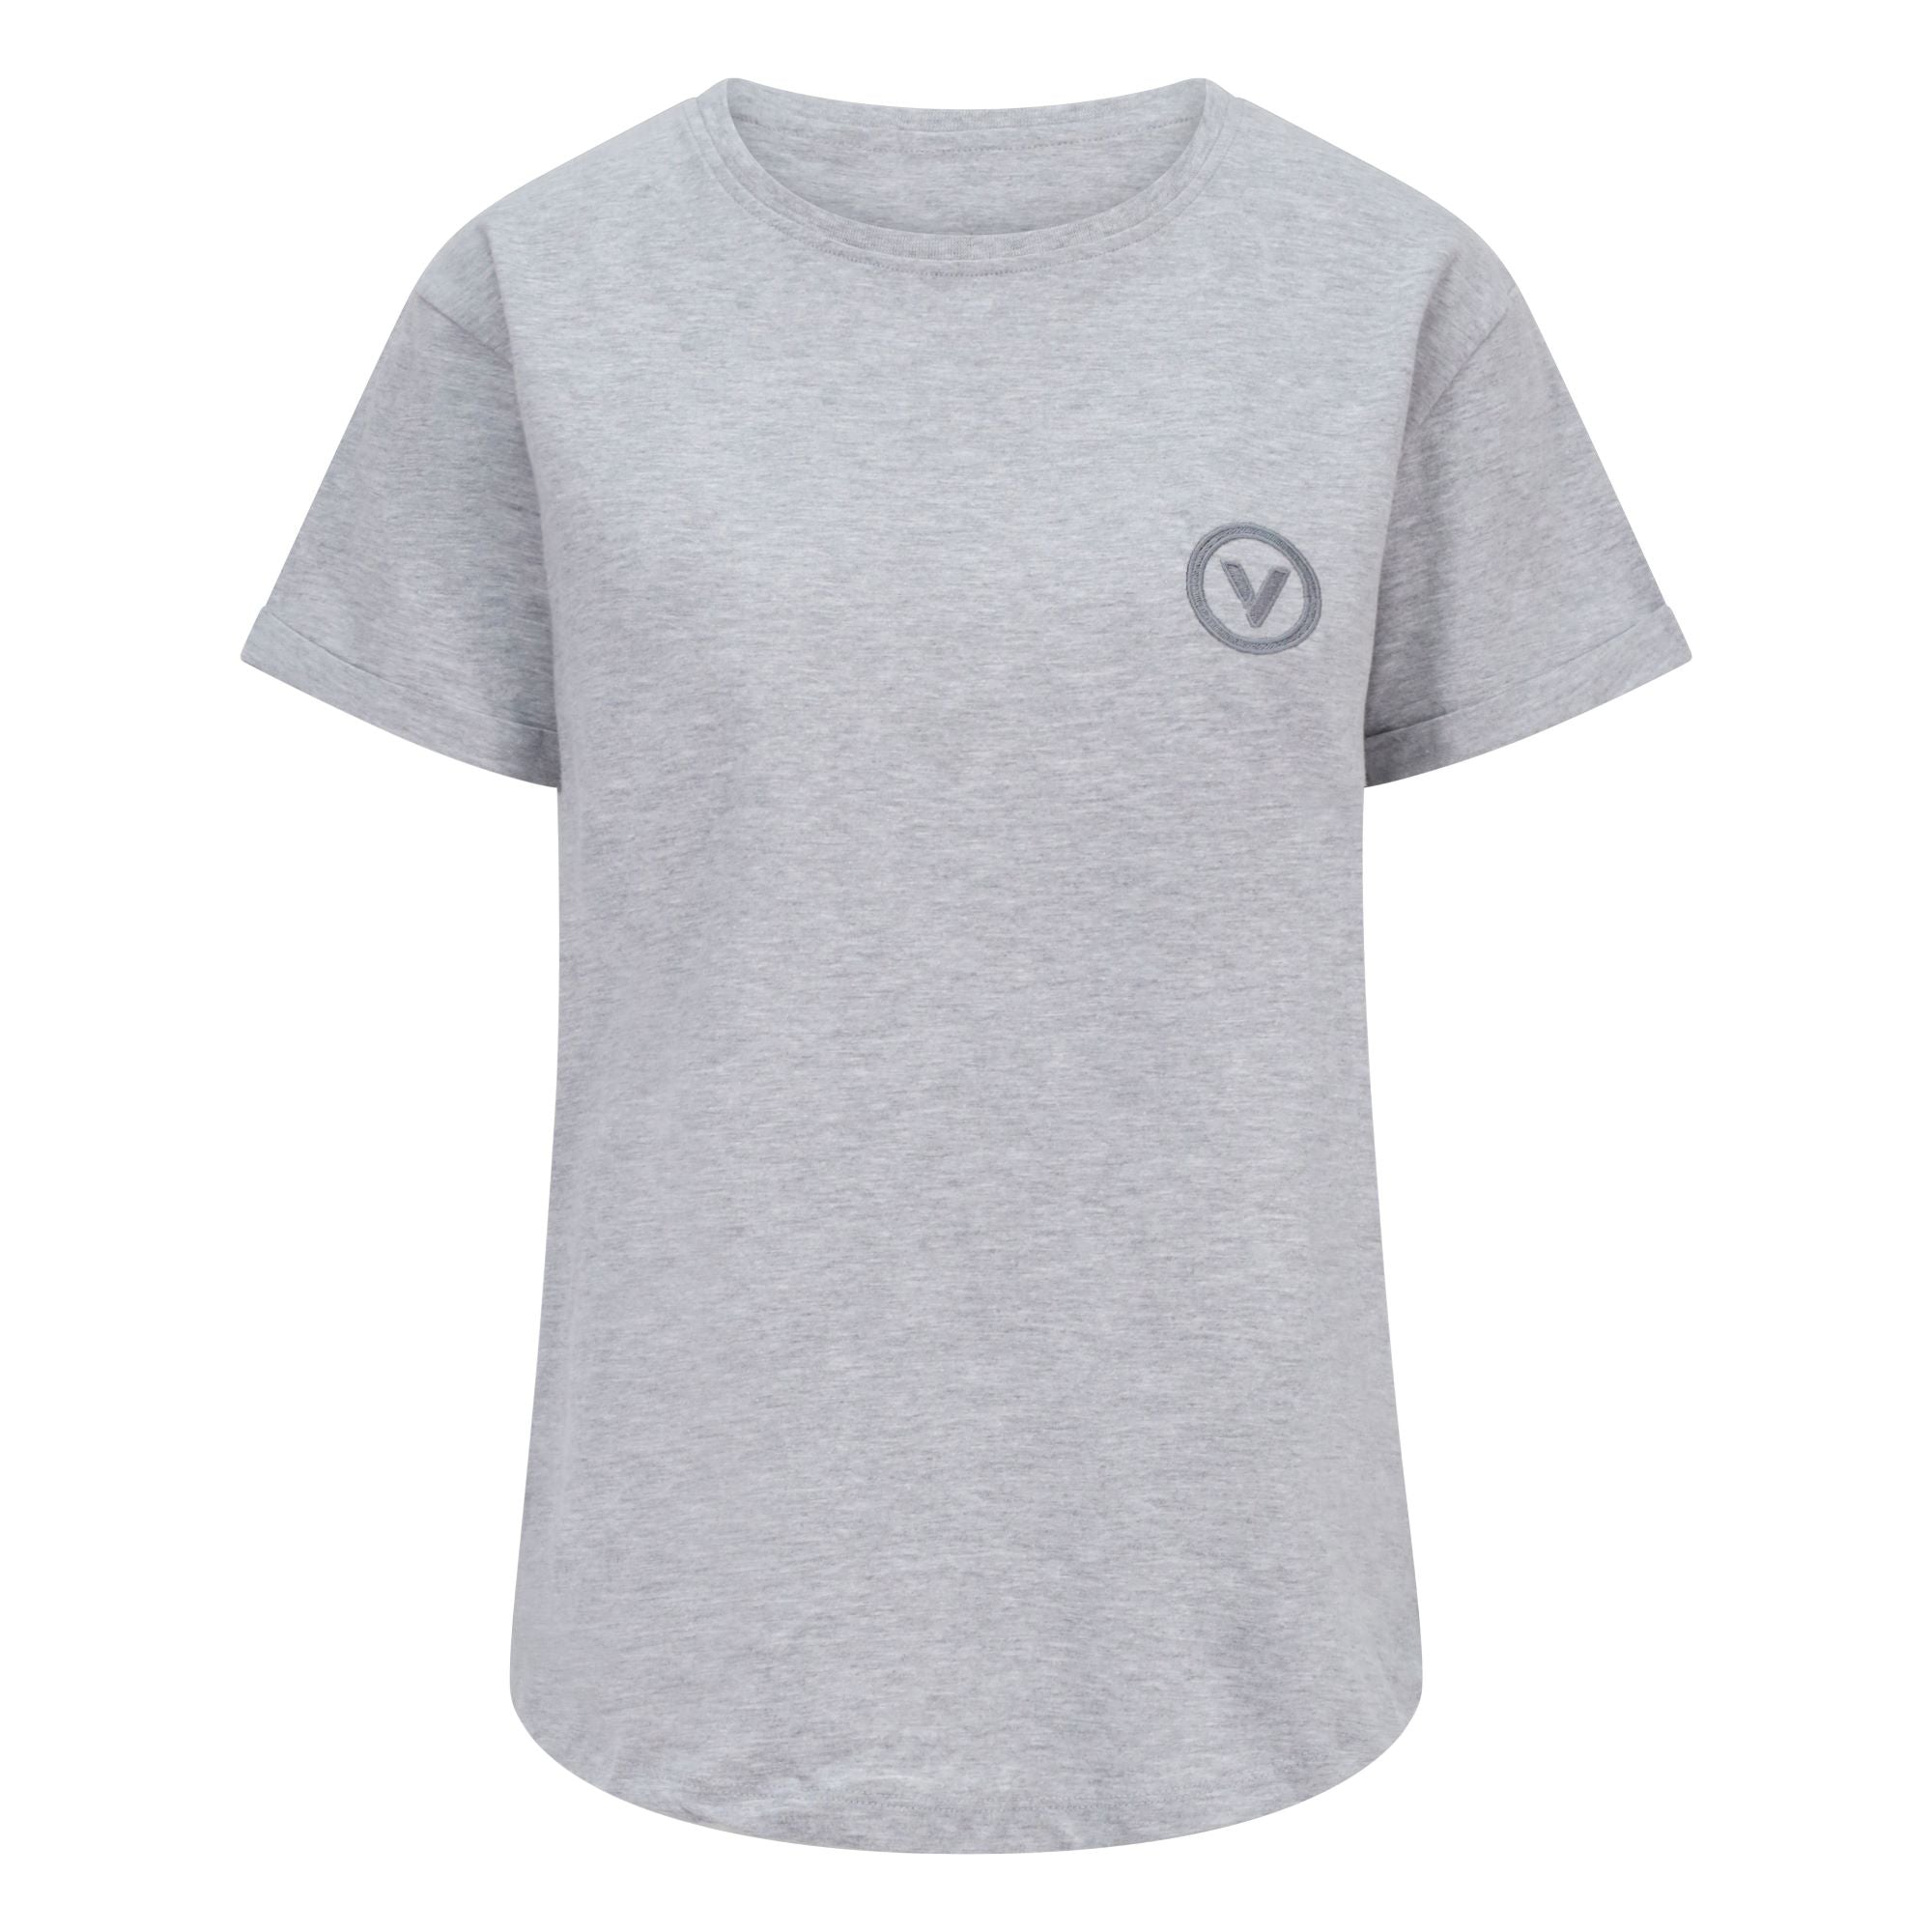 Validate Core Essentials Women's Rolled Sleeve T-Shirt Grey Heather